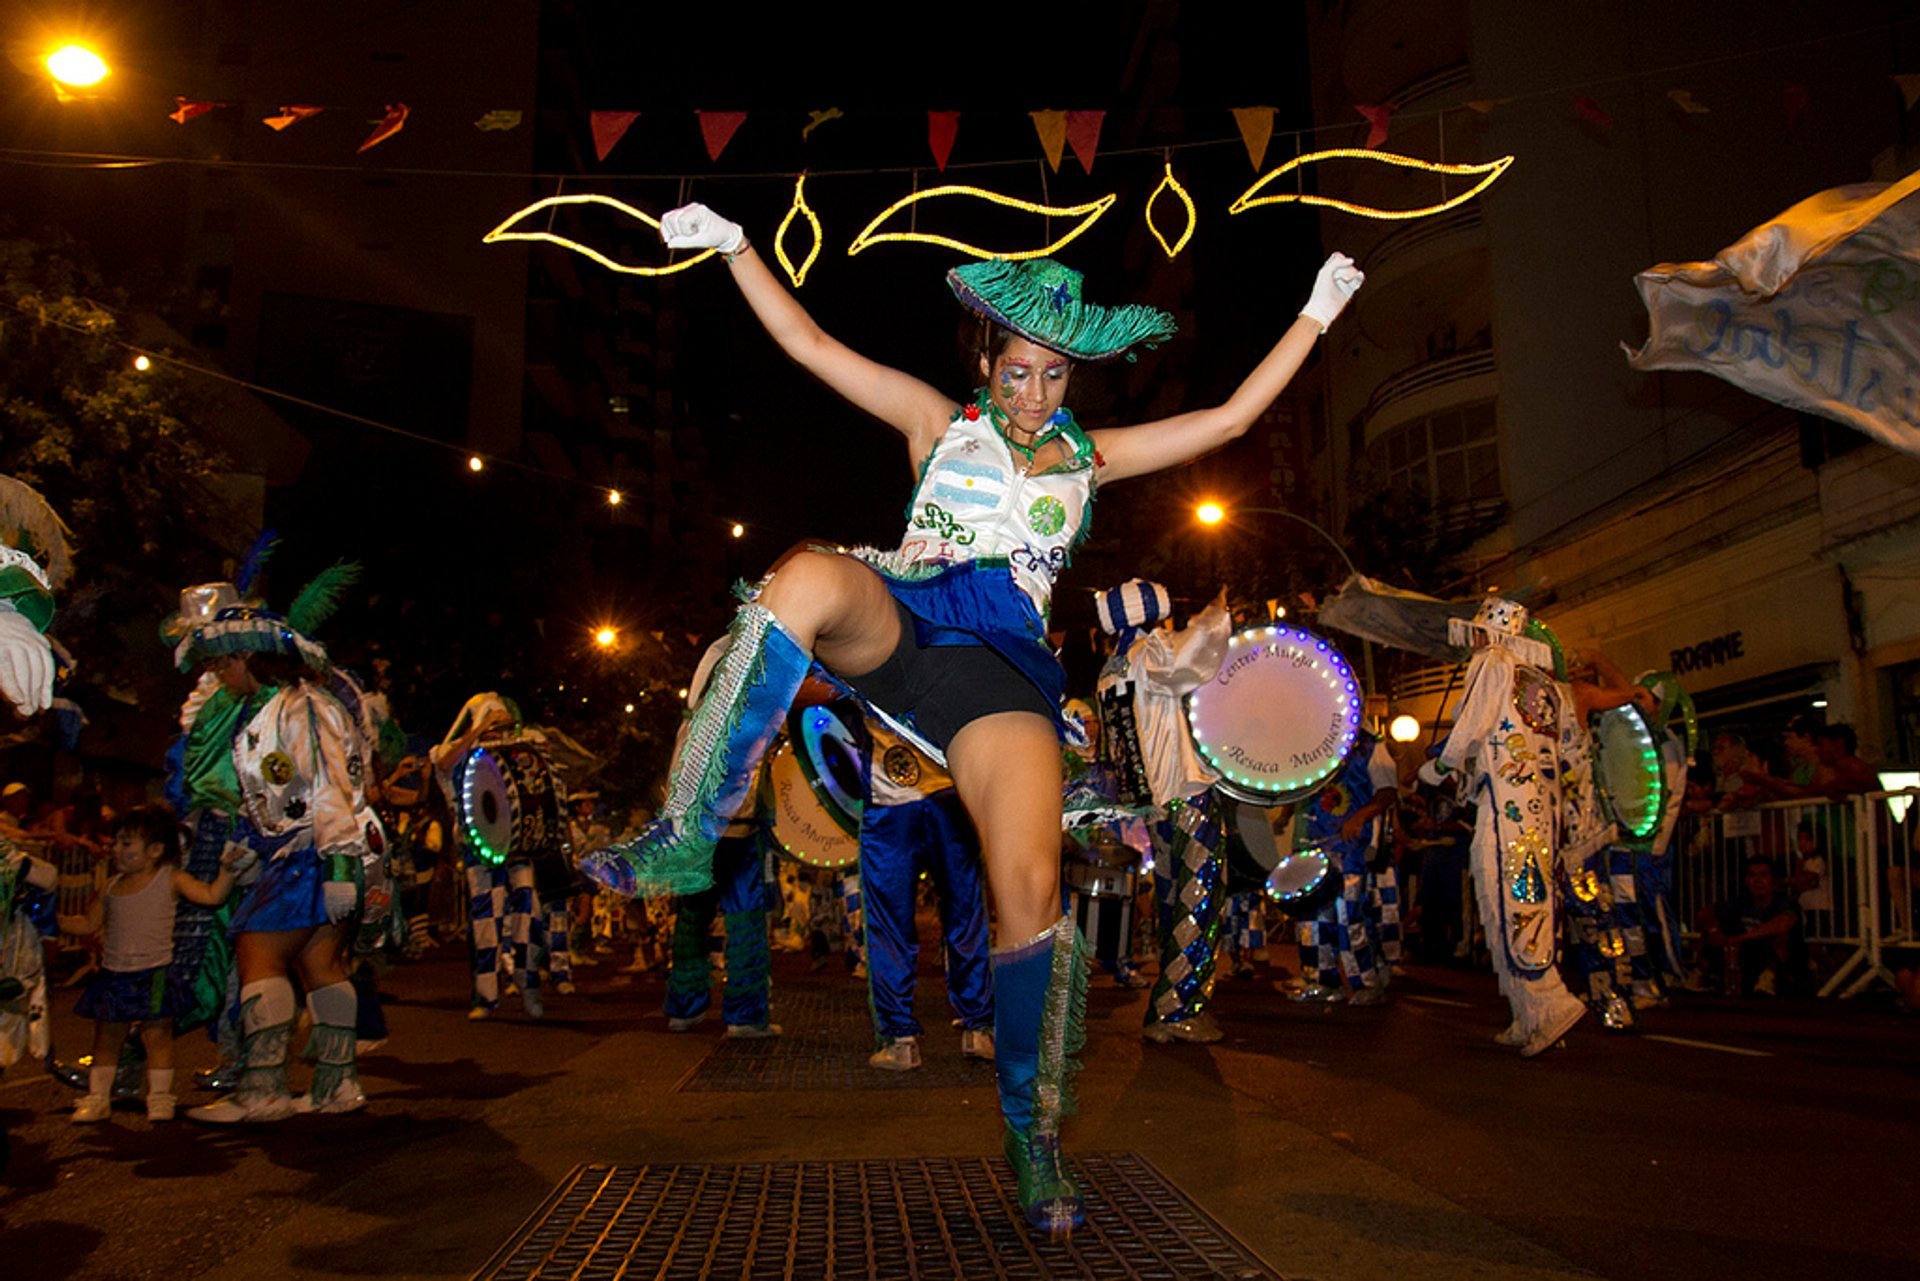 Carnaval Porteño (Buenos Aires Carnival)